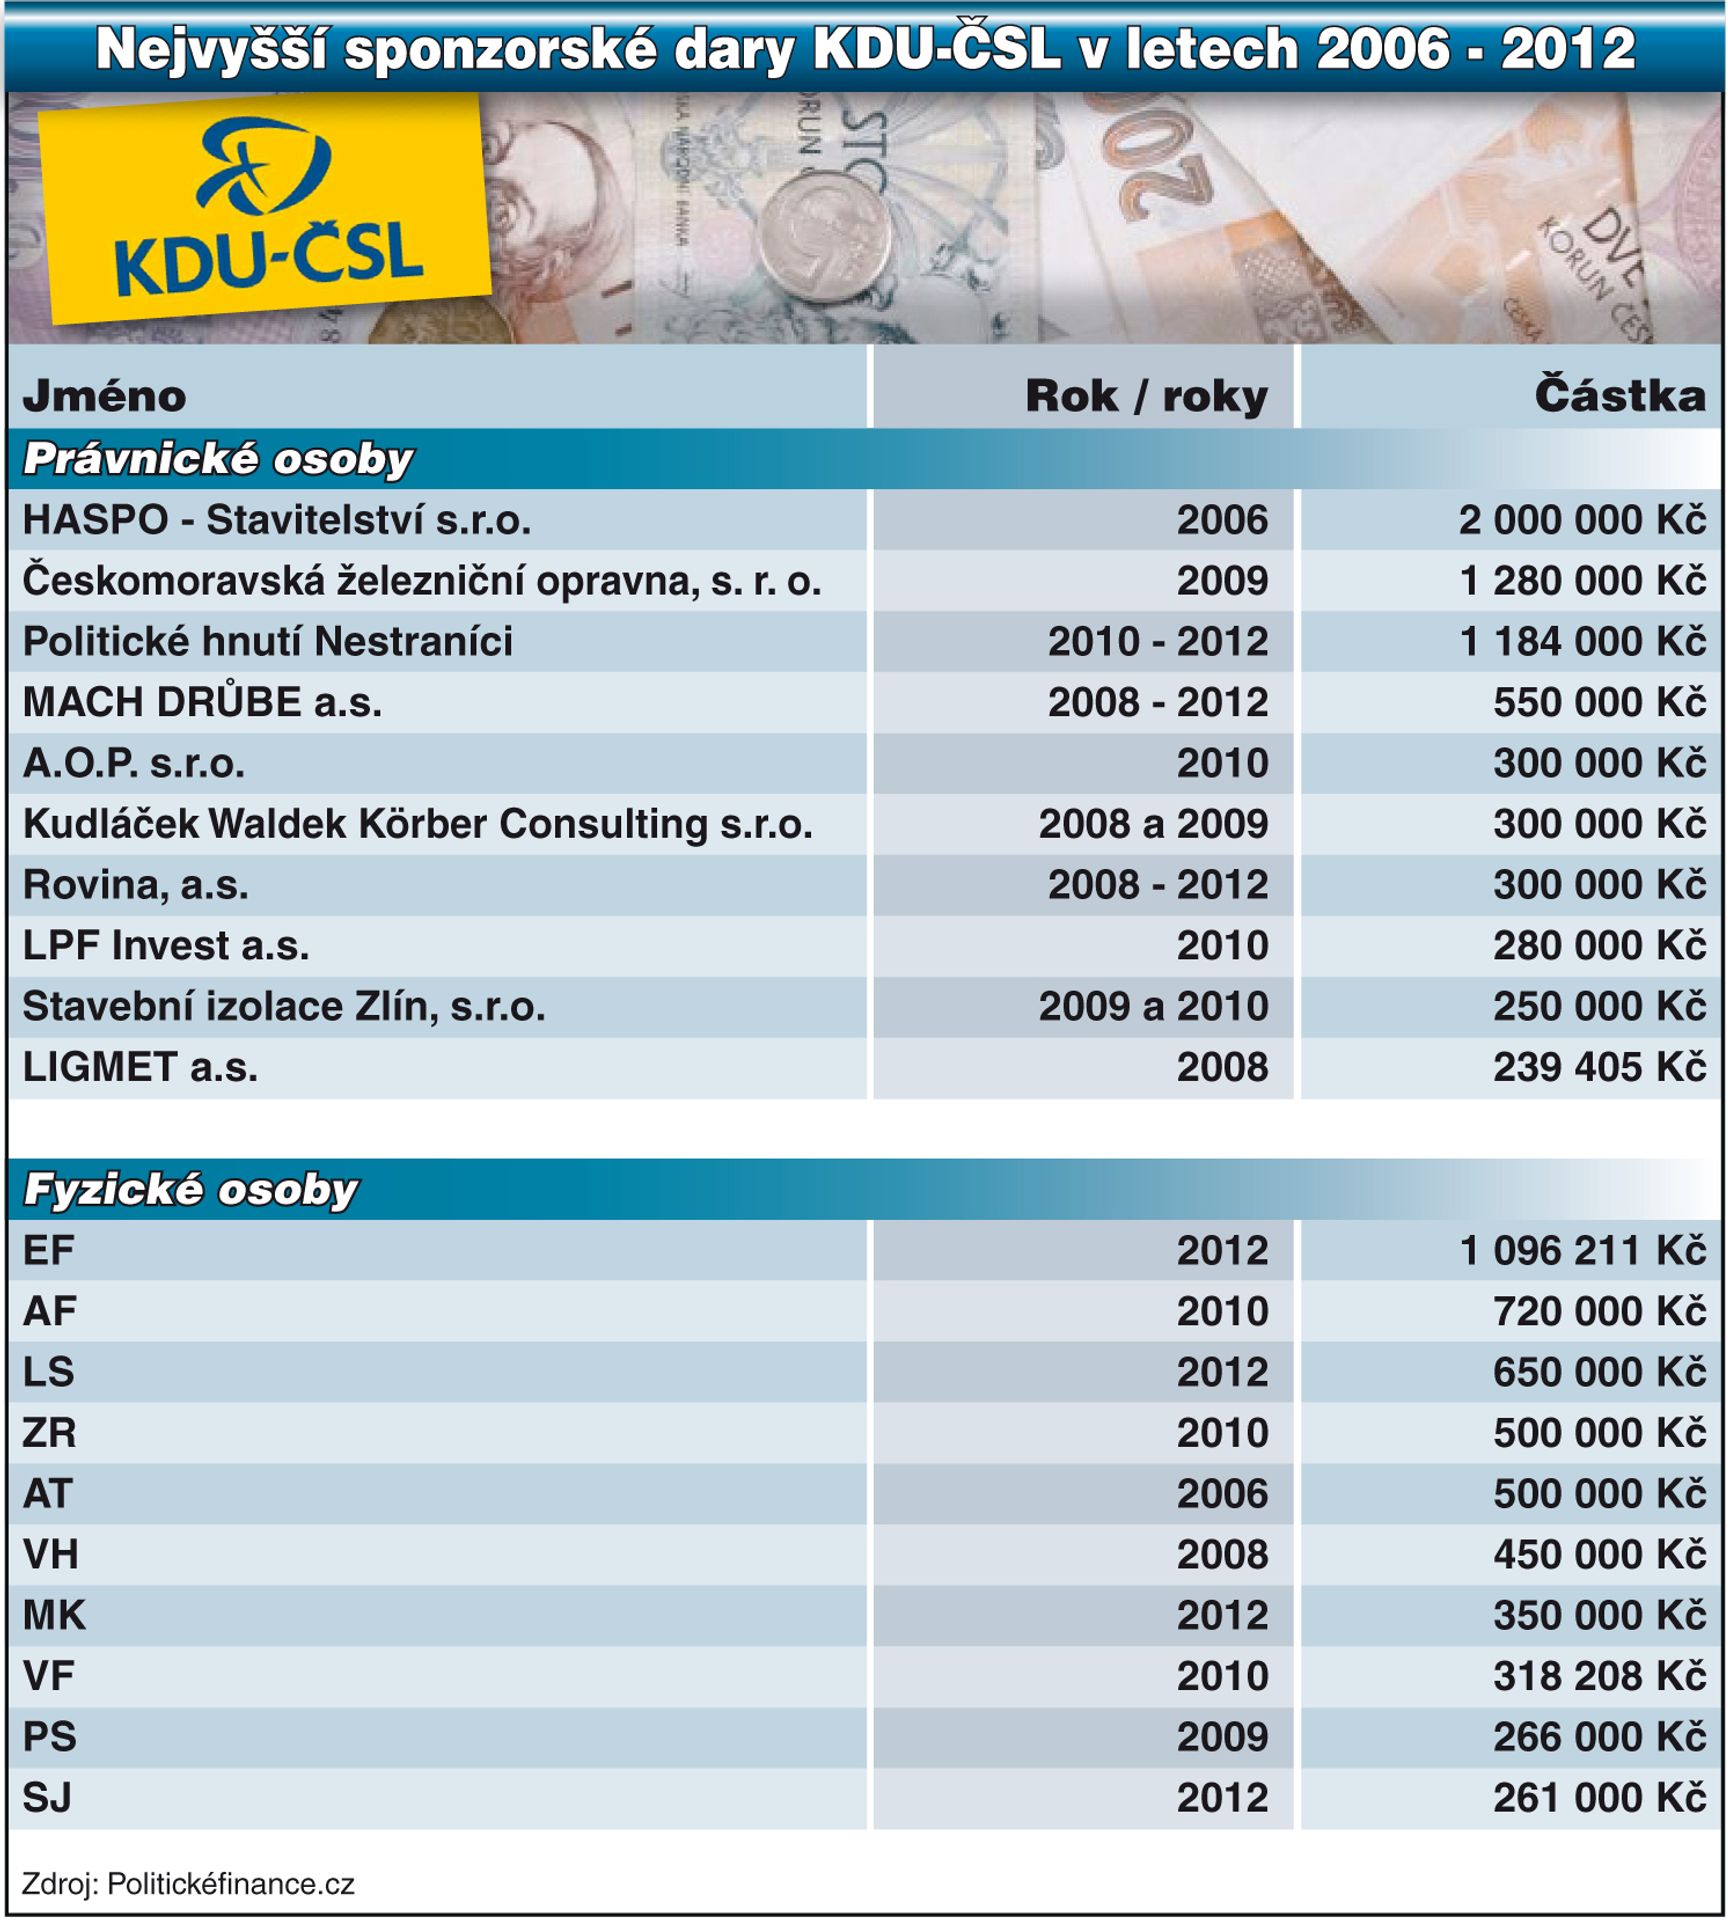 Tabulka - Nejvyšší sponzorské dary KDU-ČSL v letech 2006 - 2012 - GALERIE: Nejvyšší sponzorské dary vybraných politických stran (6/7)